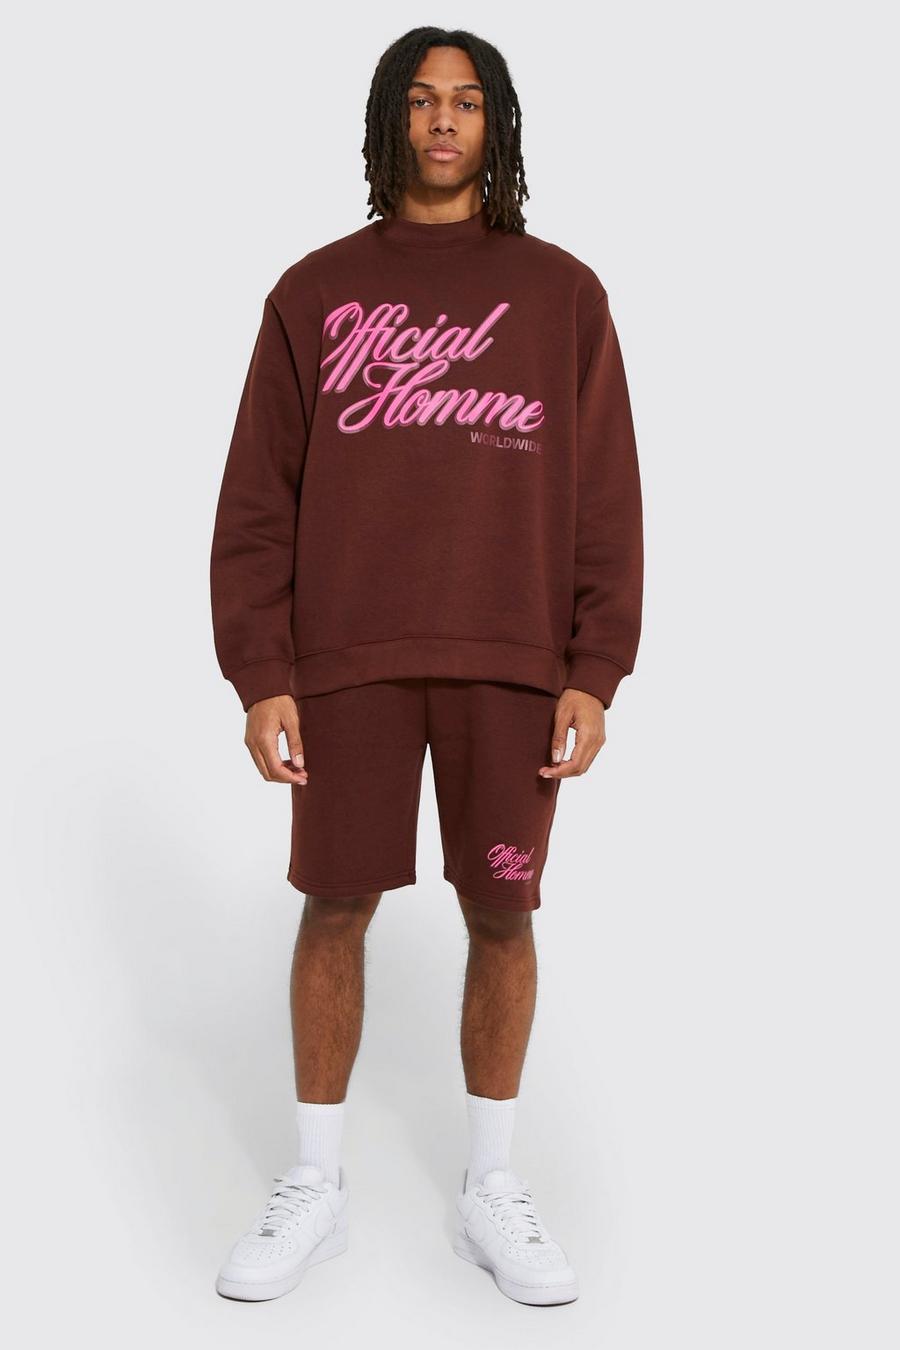 Kurzer Oversize Homme Sweatshirt-Trainingsanzug, Chocolate brown